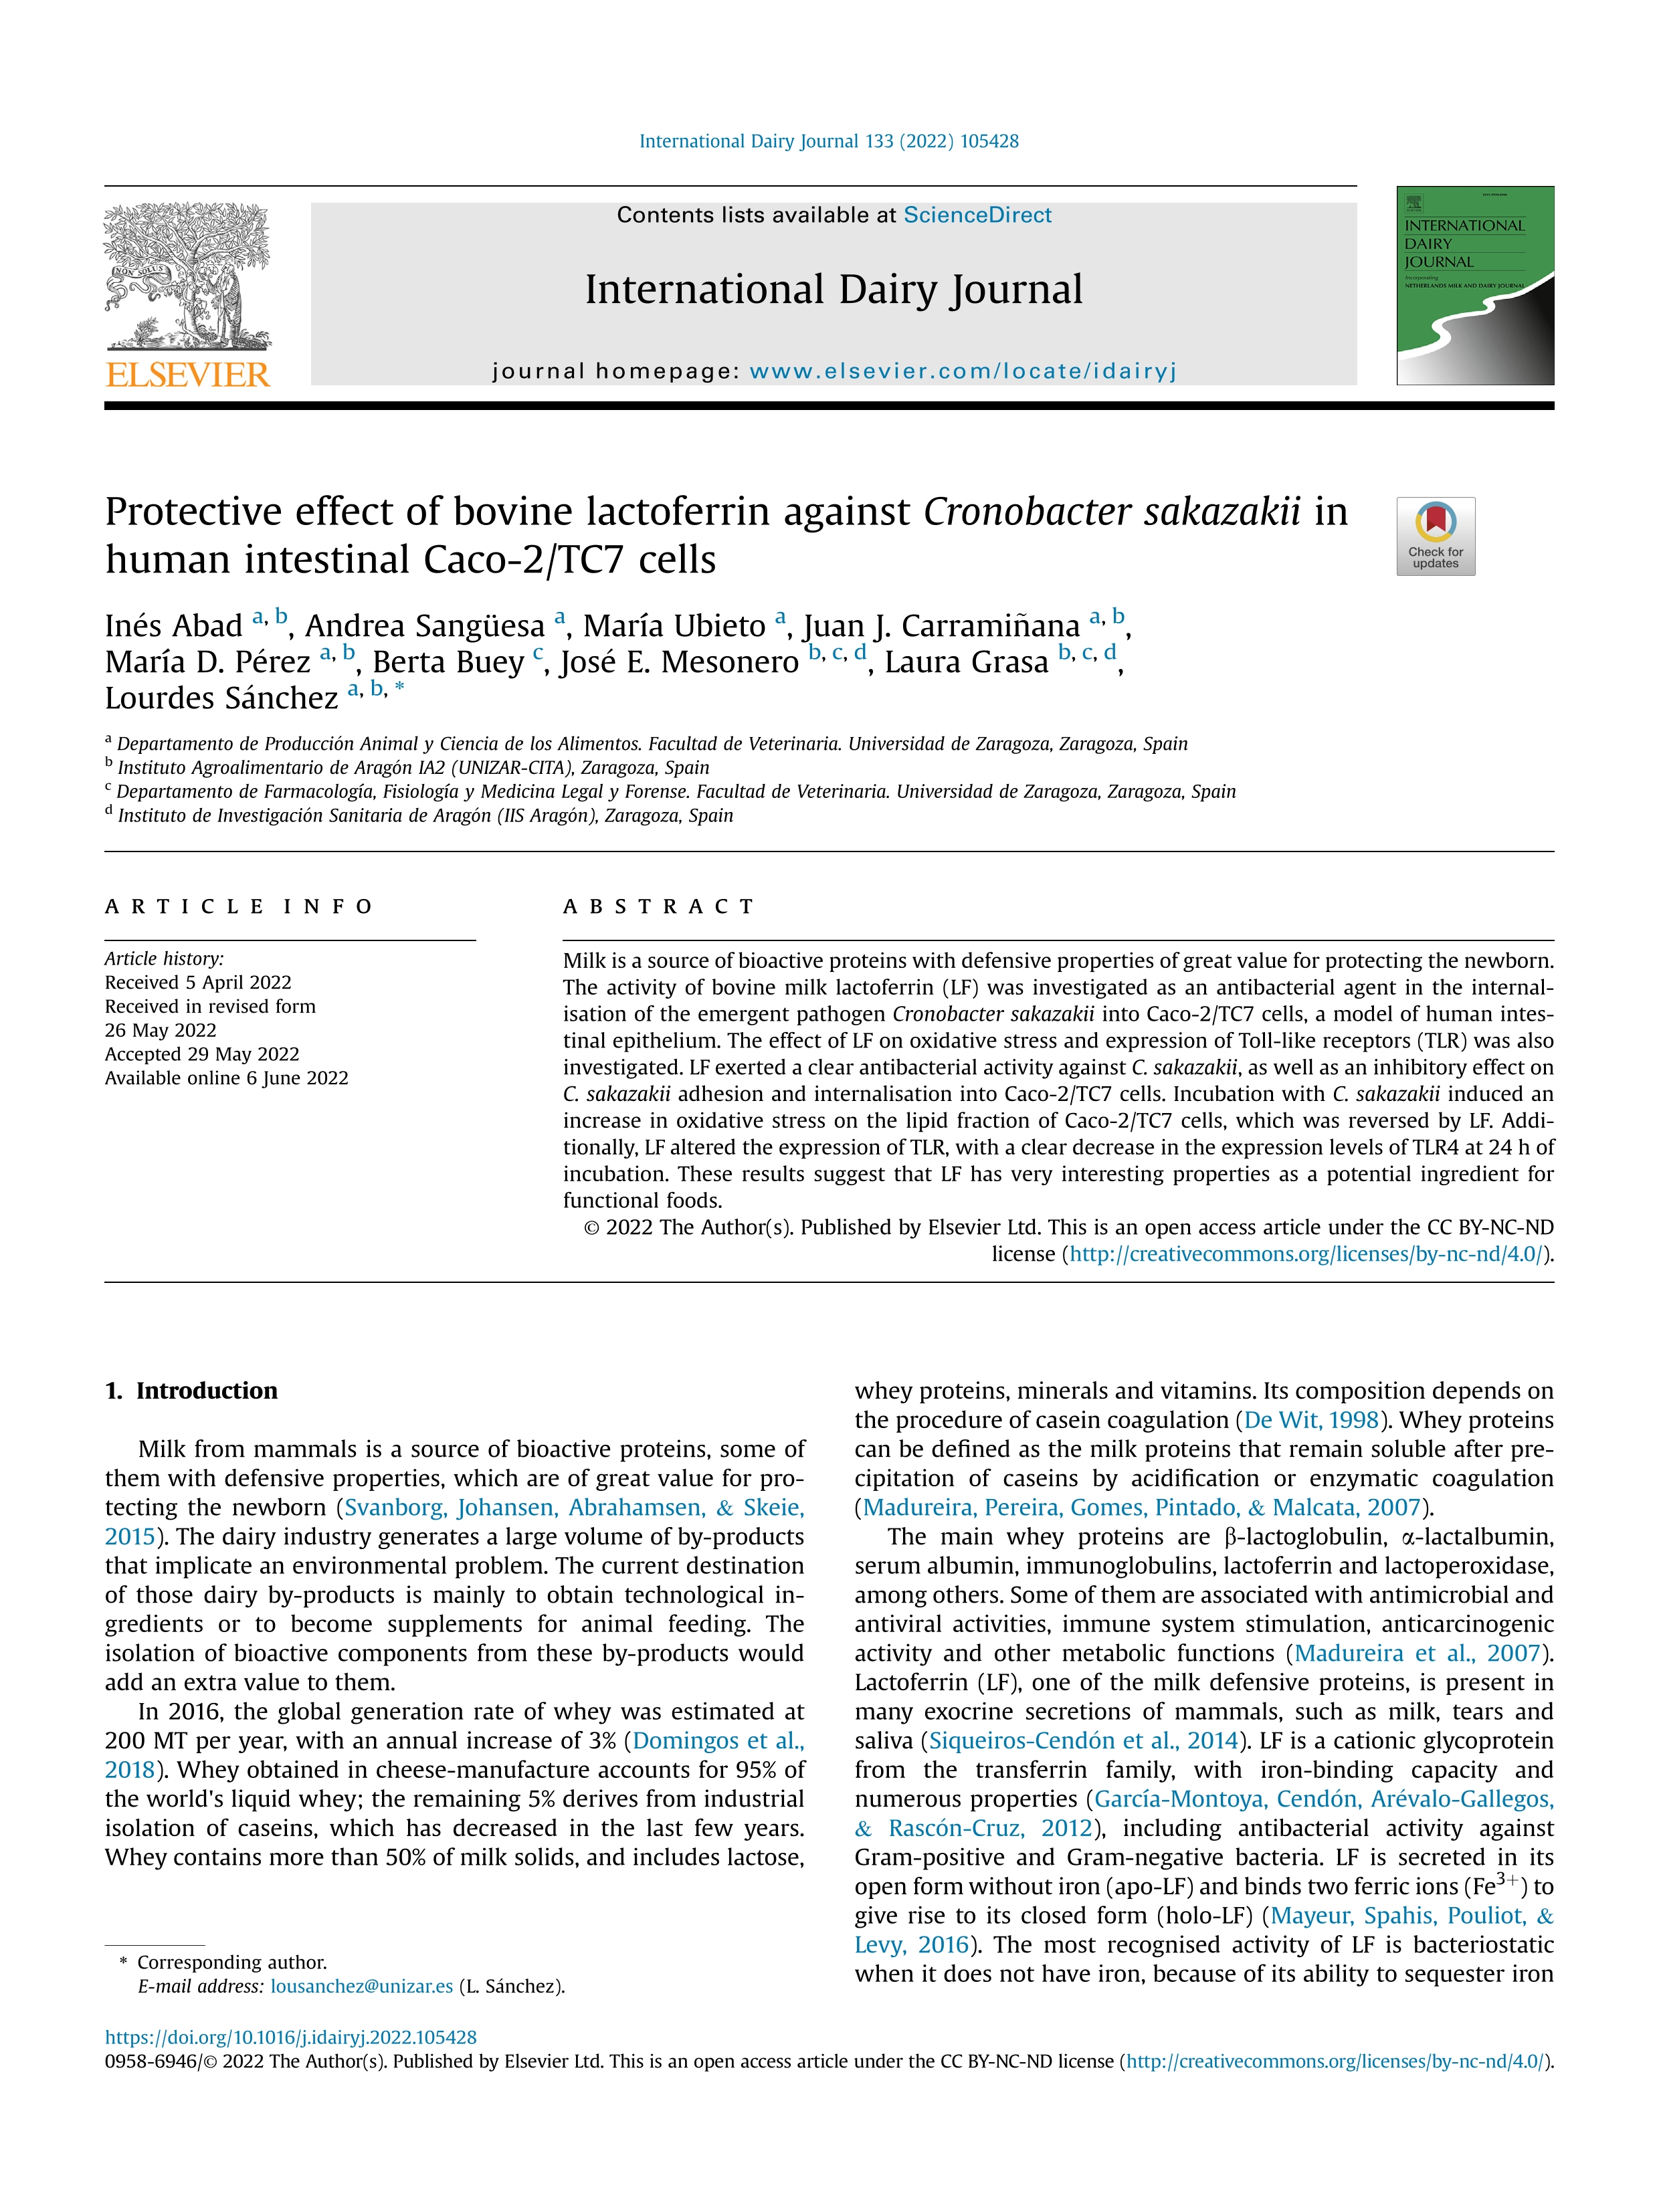 Protective effect of bovine lactoferrin against Cronobacter sakazakii in human intestinal Caco-2/TC7 cells